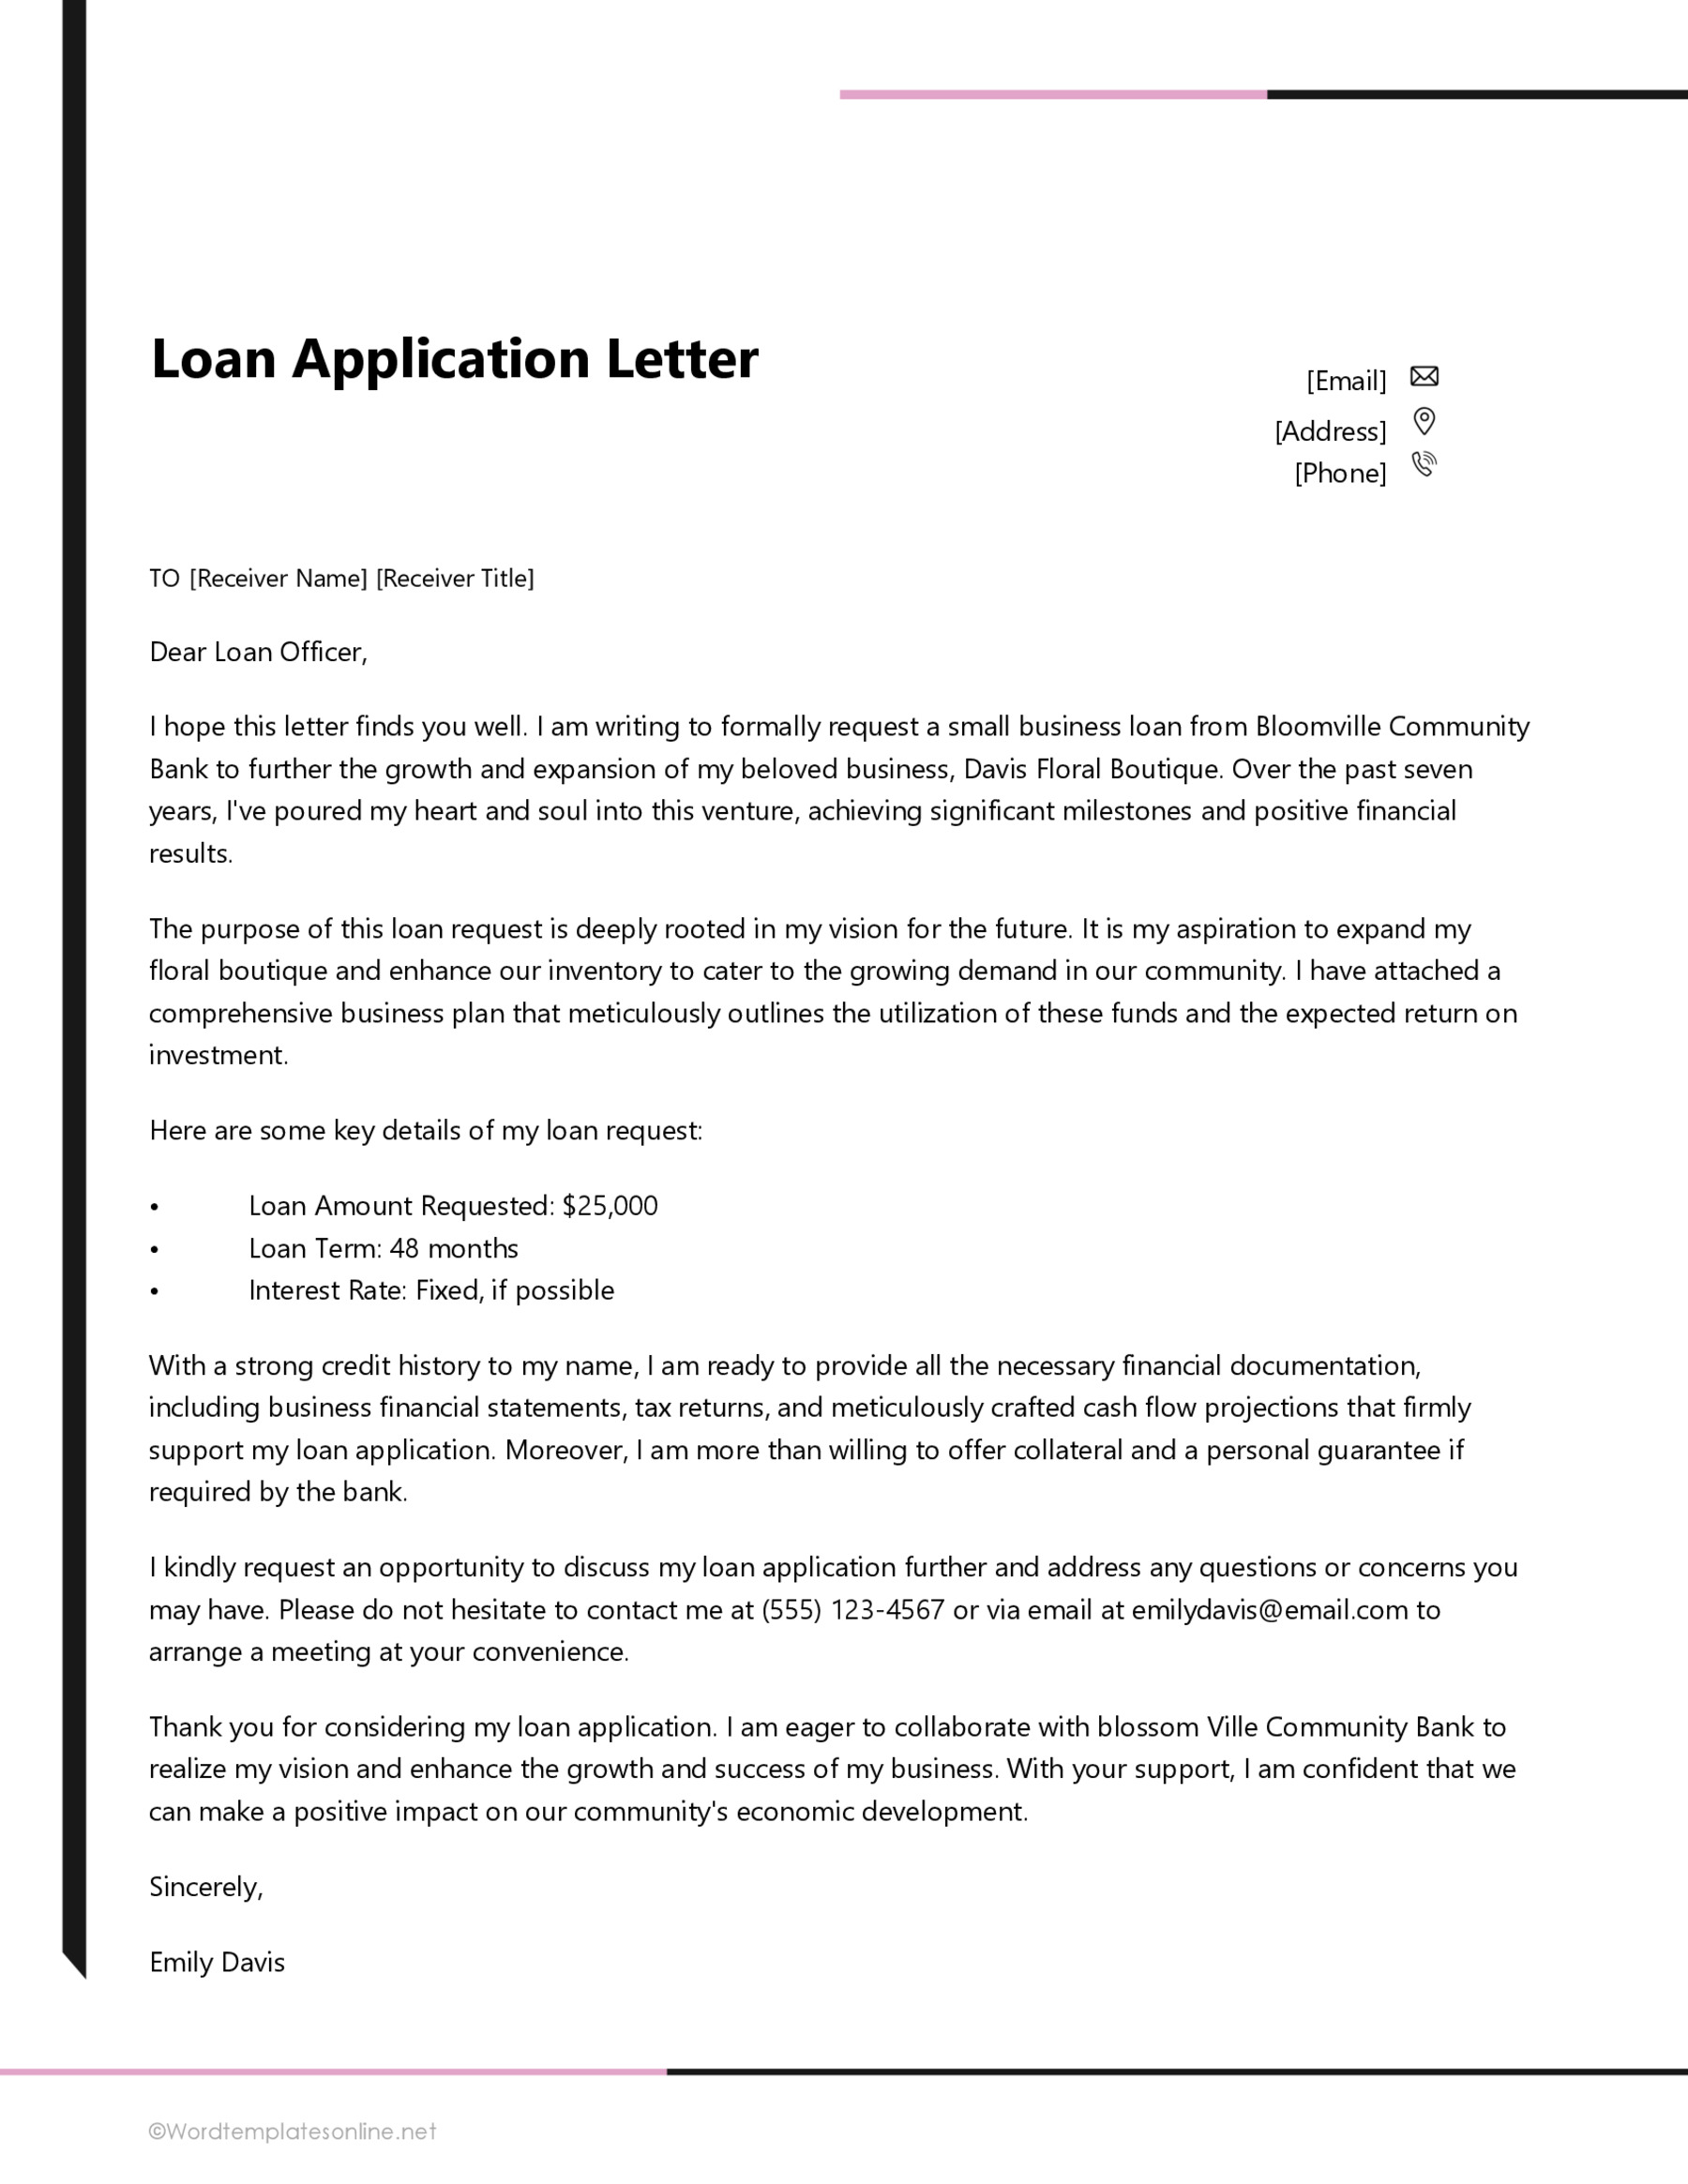 Loan Application Letter Sample Document